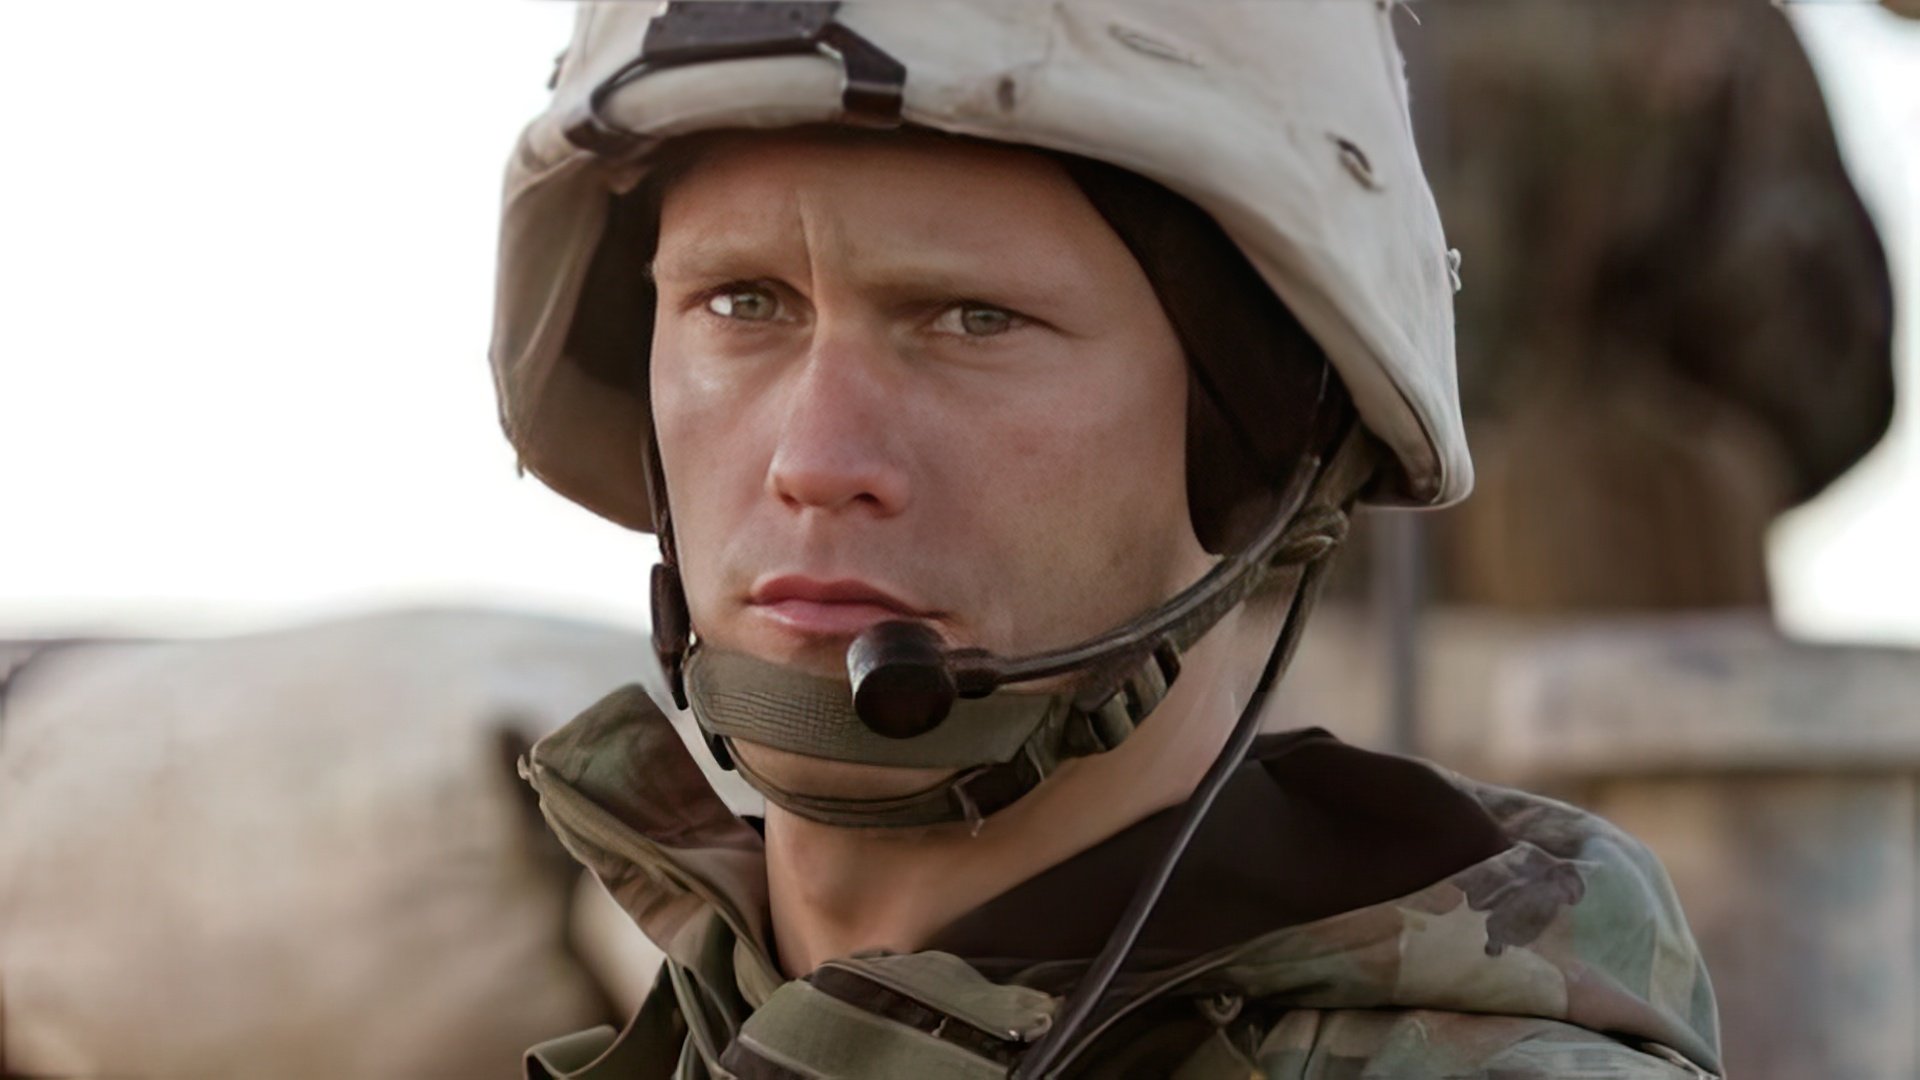 «Generation Kill»: Alexander Skarsgård in the role of Sergeant Iceman